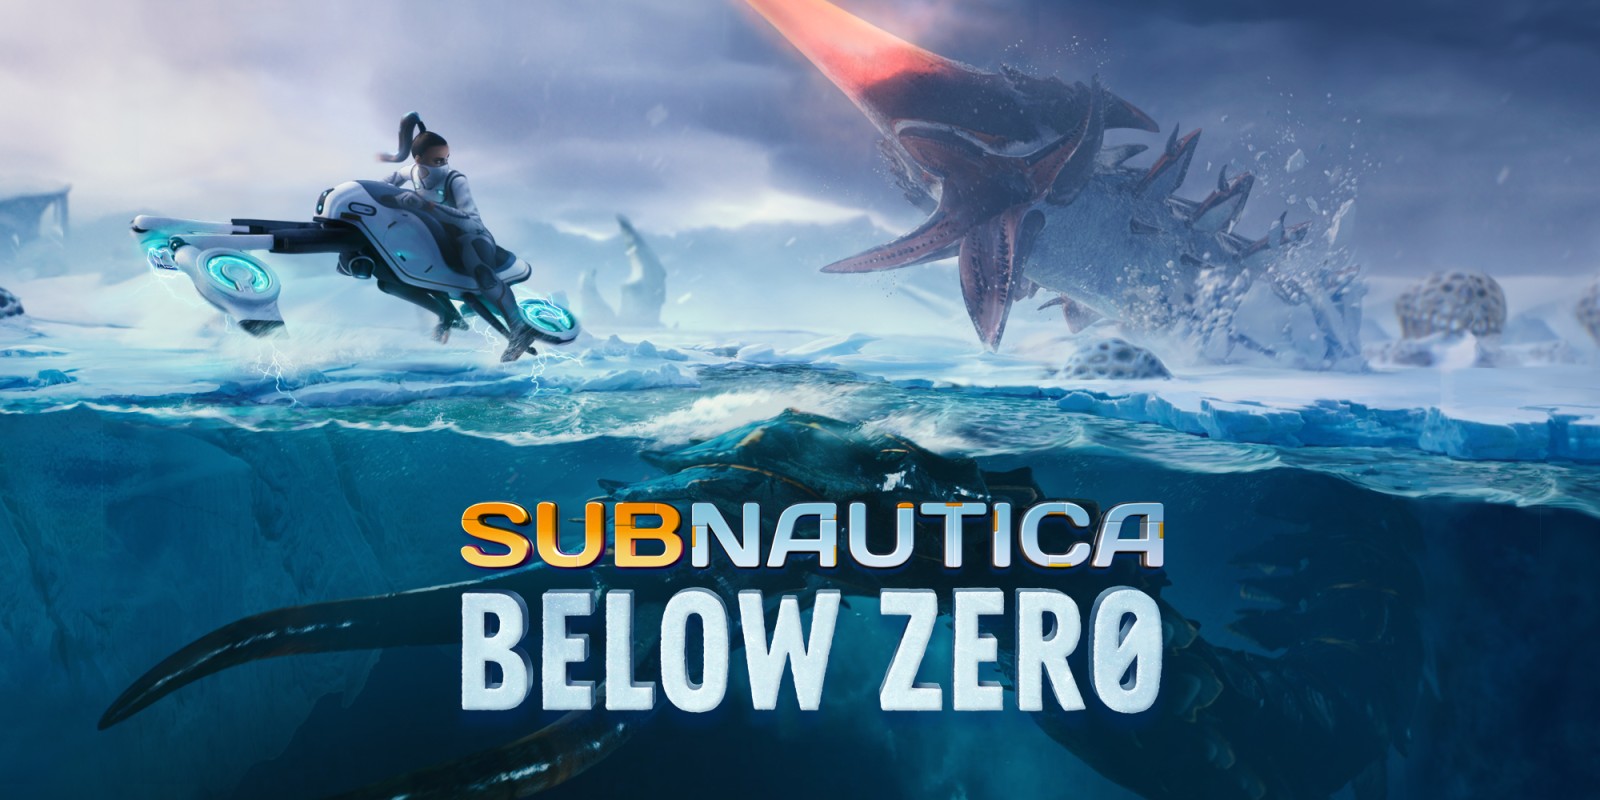 Subnautica: Below Zero (Image Credits: unknownworlds)